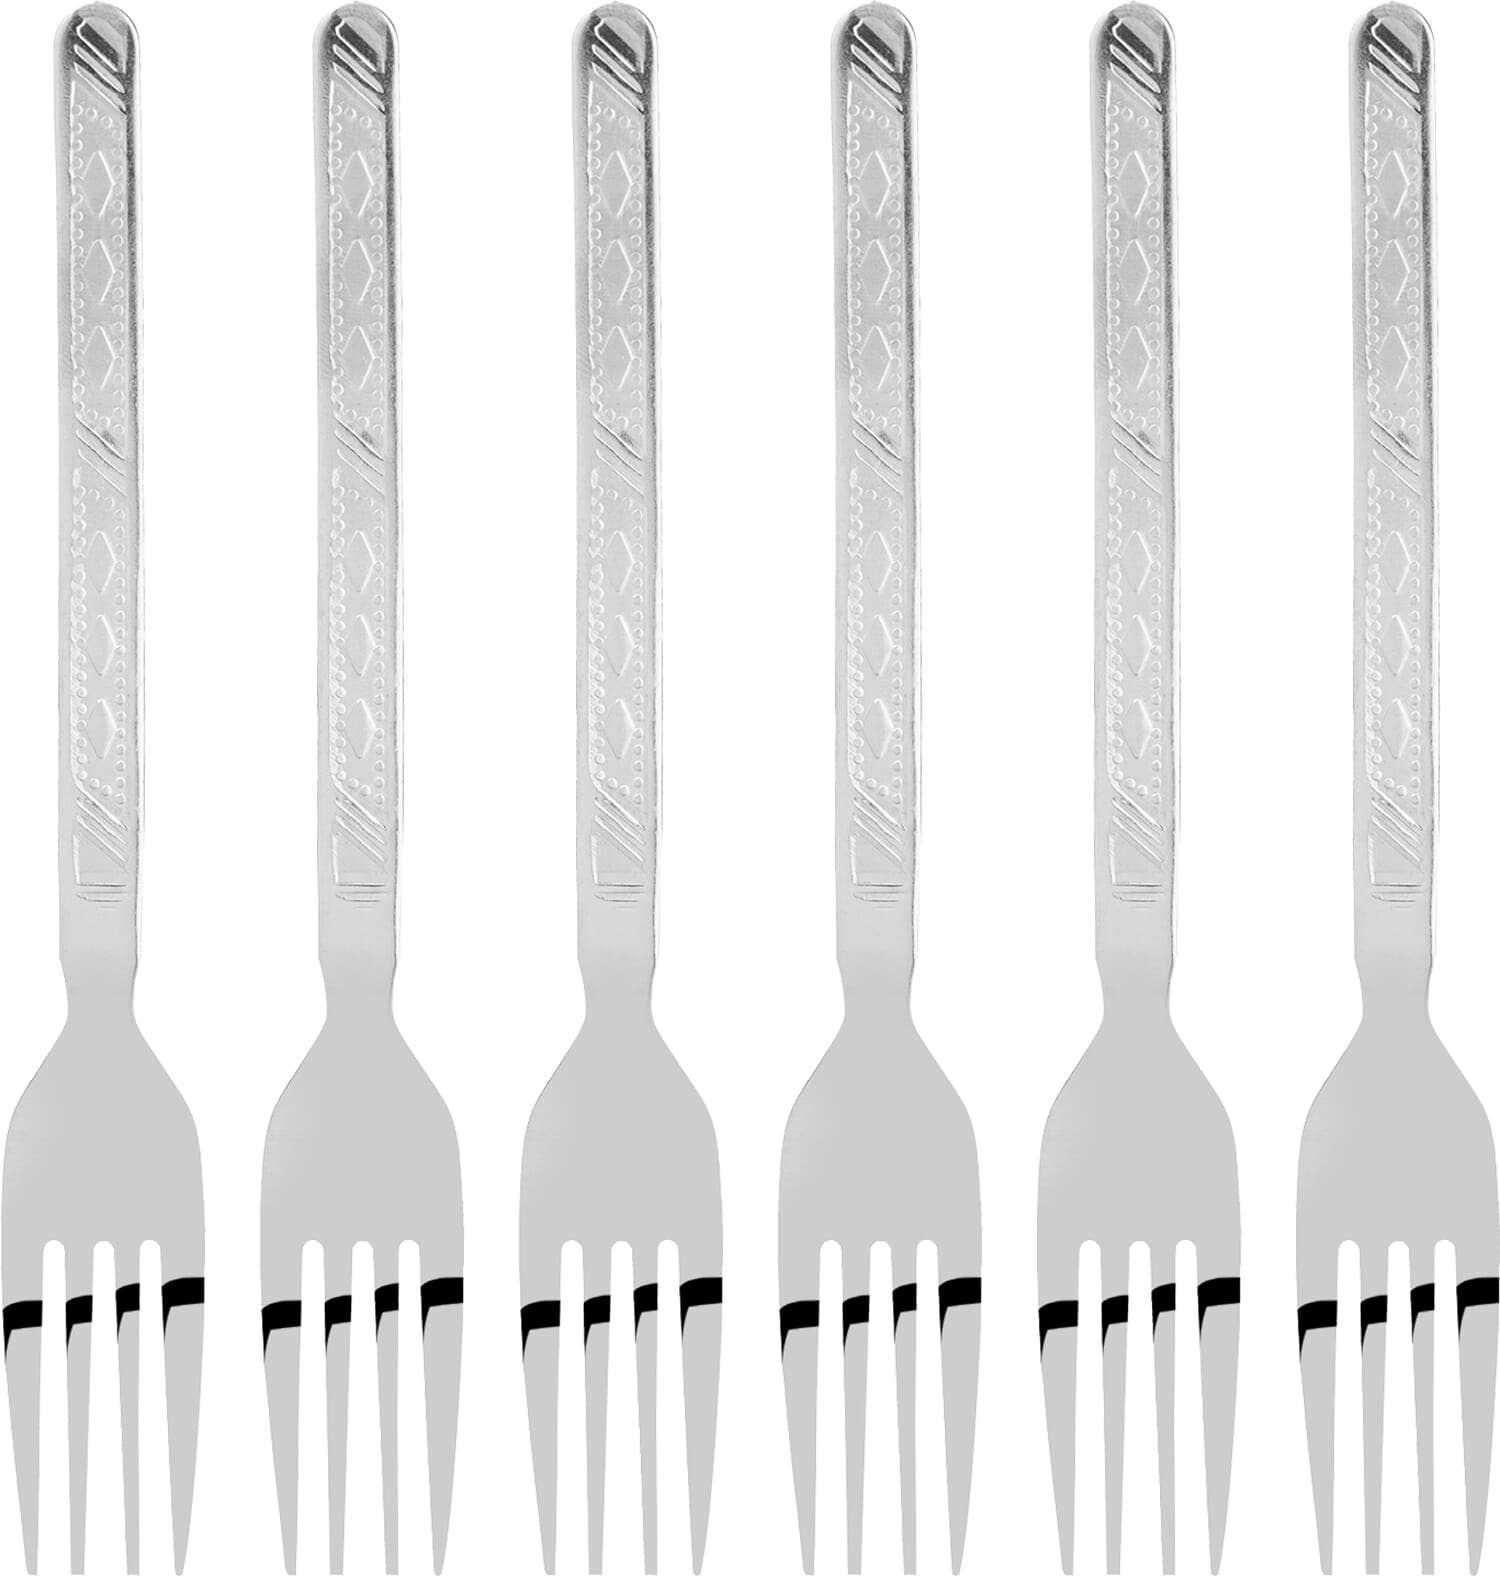 Get El Hoda Dinner Fork Set, 3 Pieces - Silver with best offers | Raneen.com